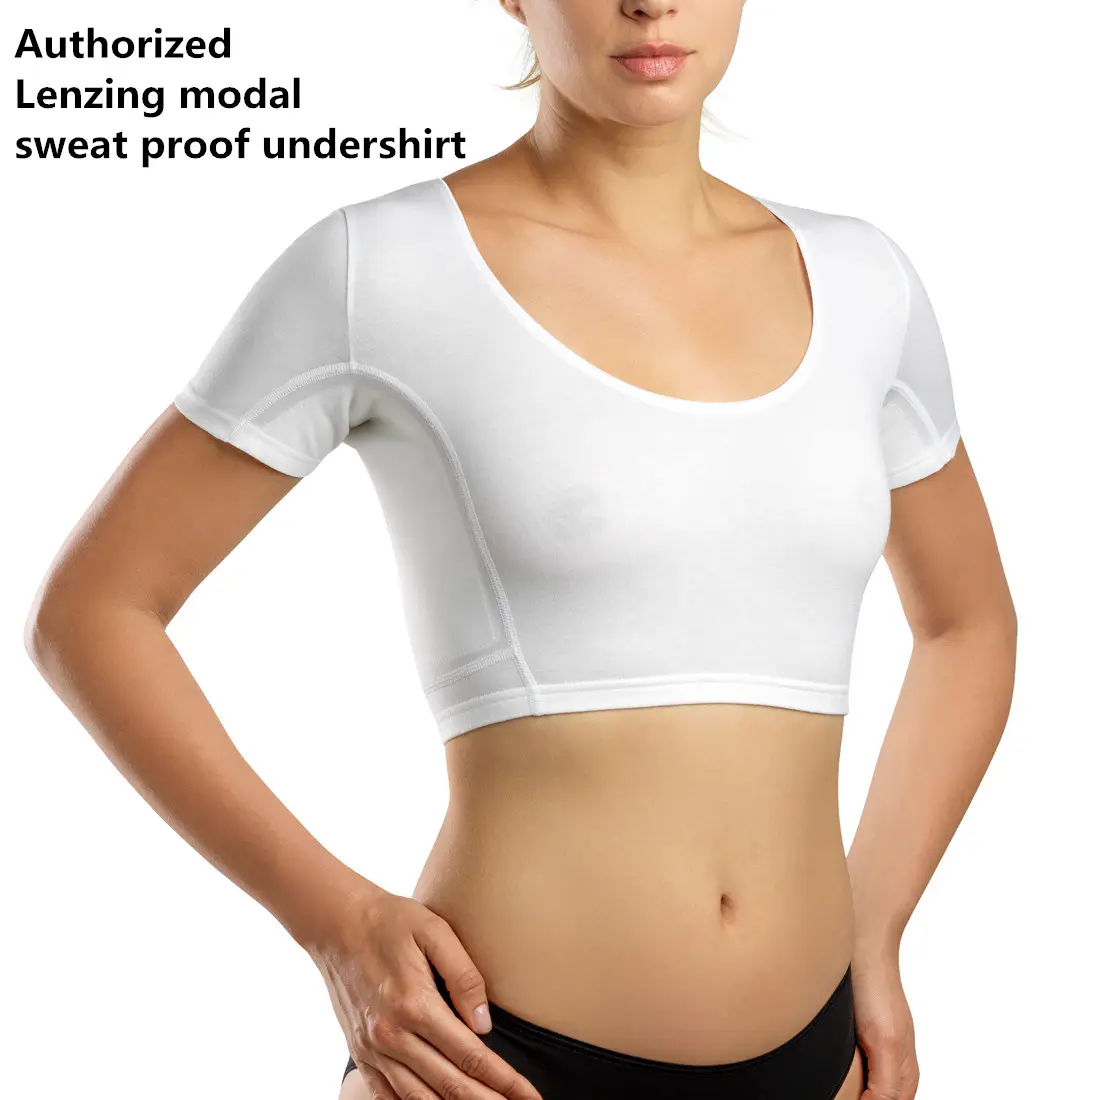 PATON LUXURY QUALITY Custom Modal V-Neck Plus Size Dress Shirt Anti Sweat Resistant Men's Sweatproof Tee Shirt CROP Undershirt